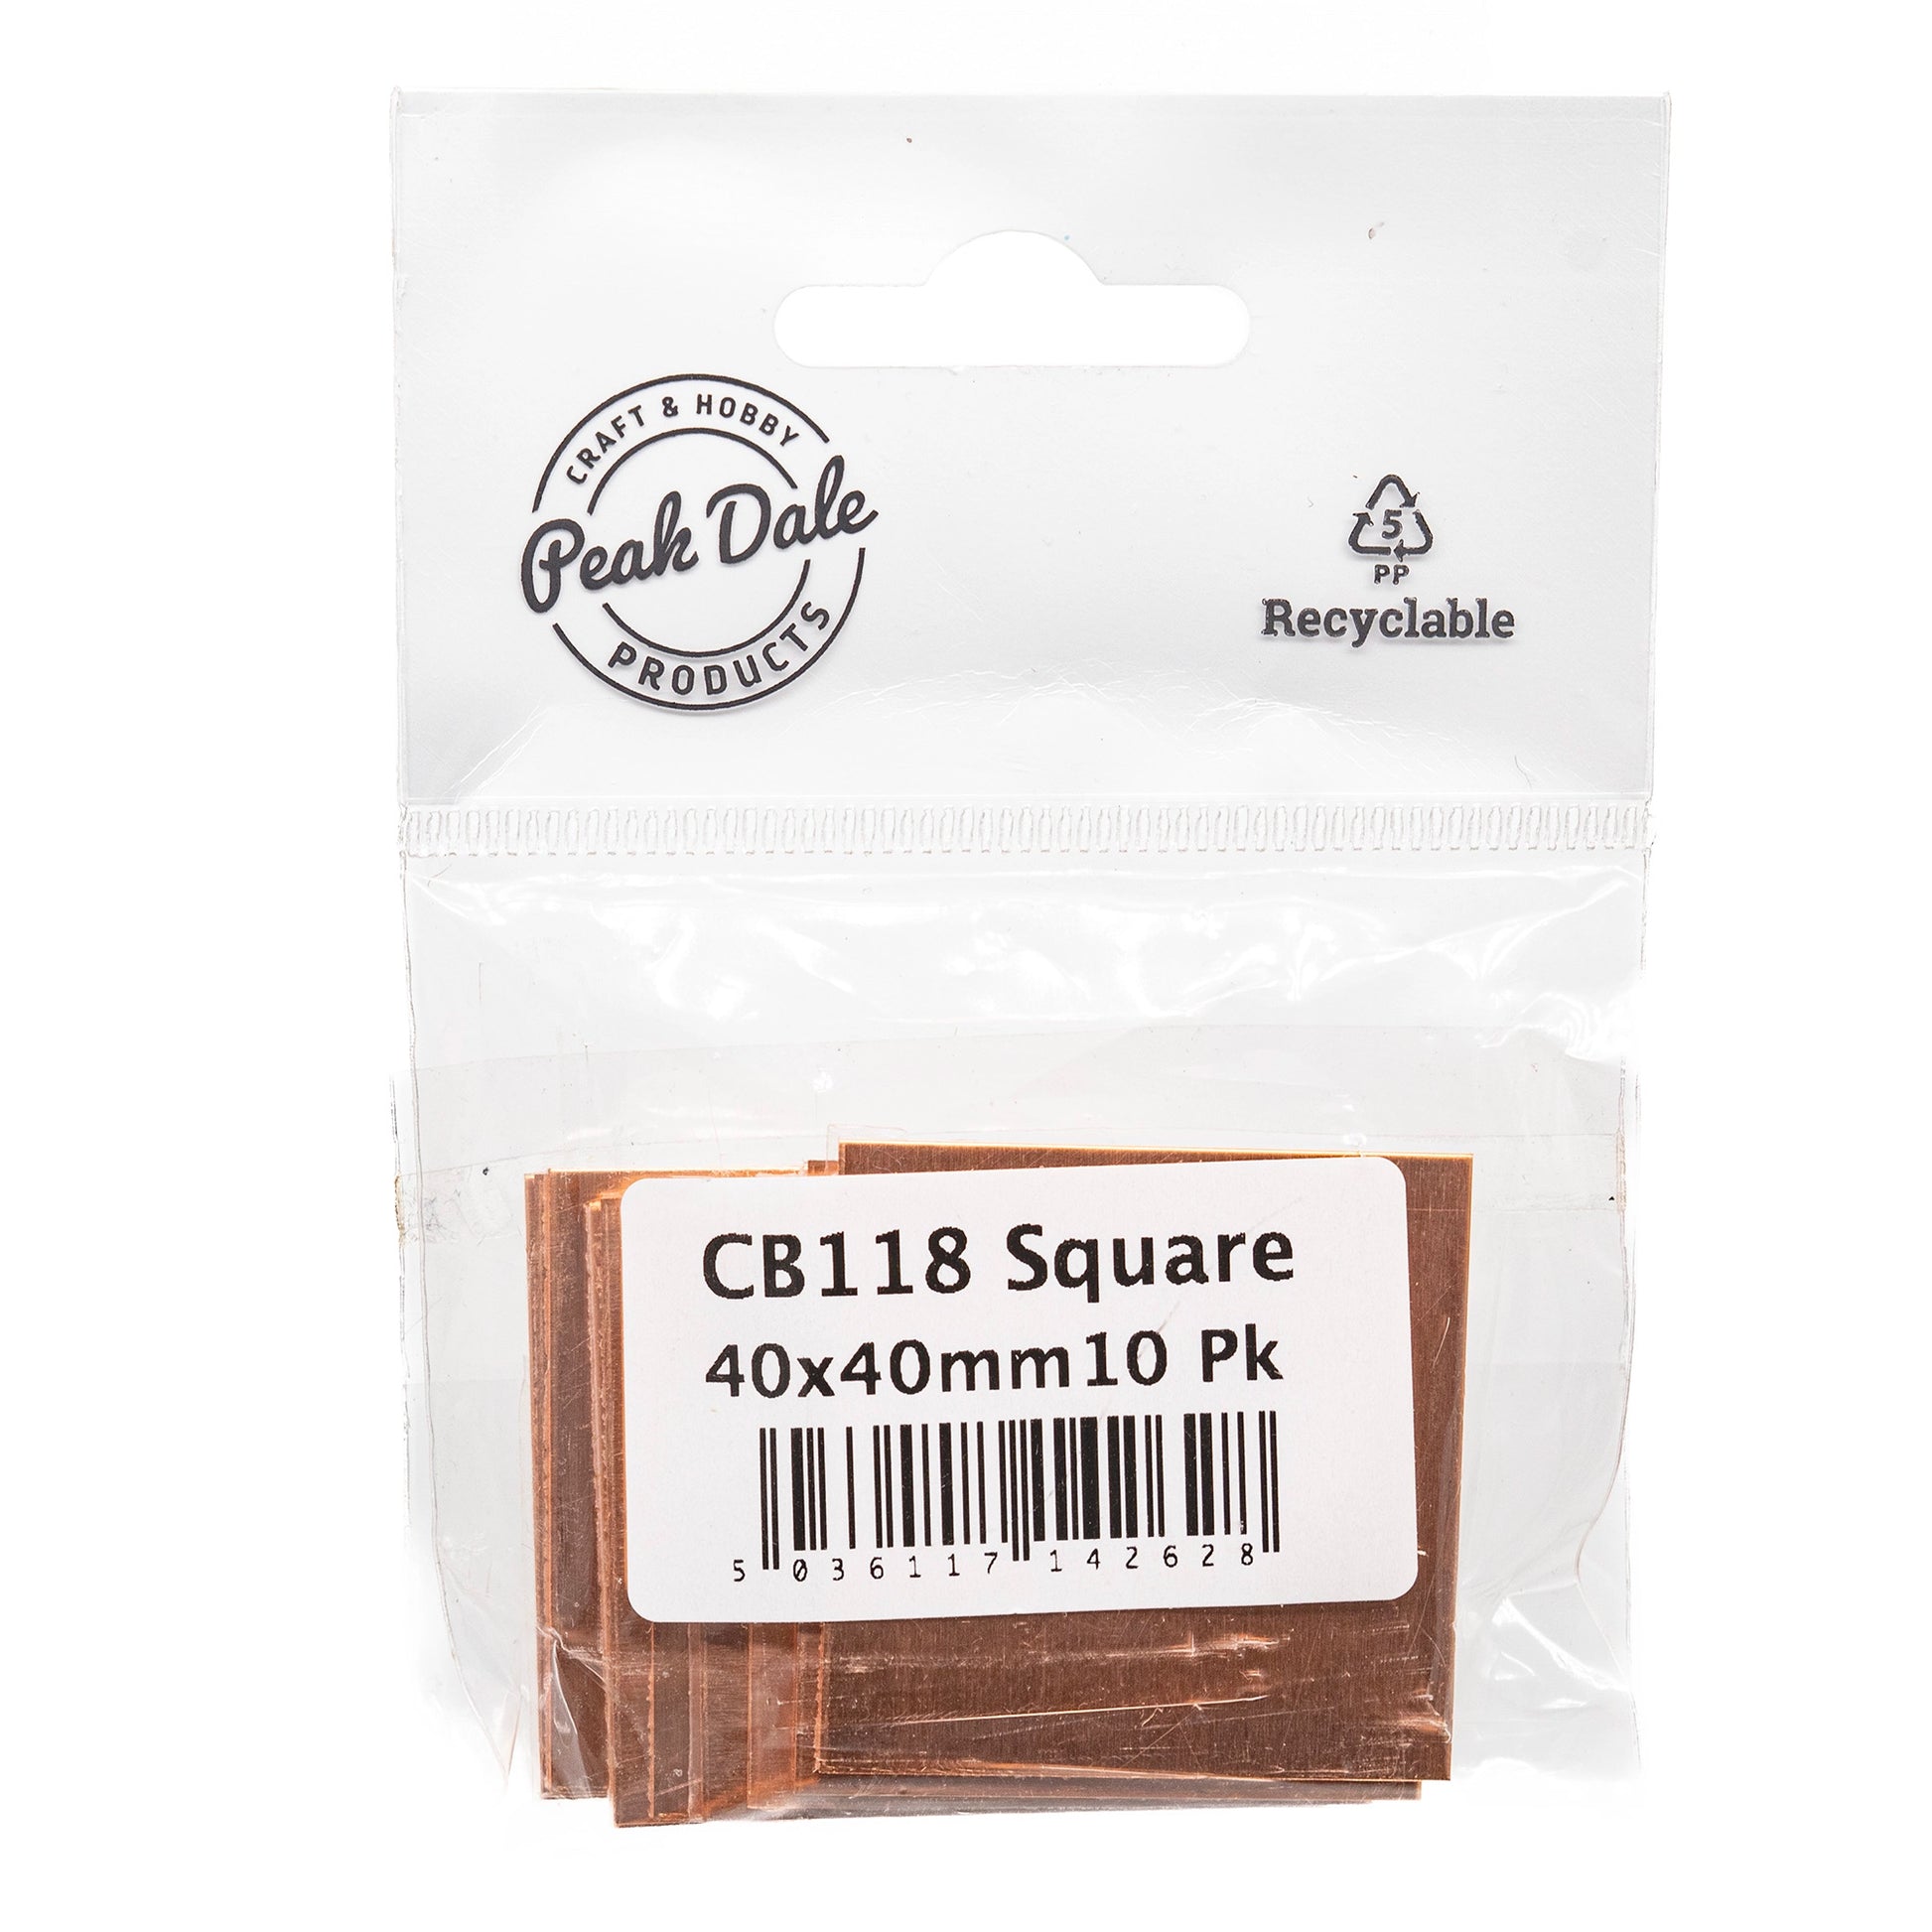 CB118 Square 40x40mm Copper Blank 10 Pk - Default (CB118)